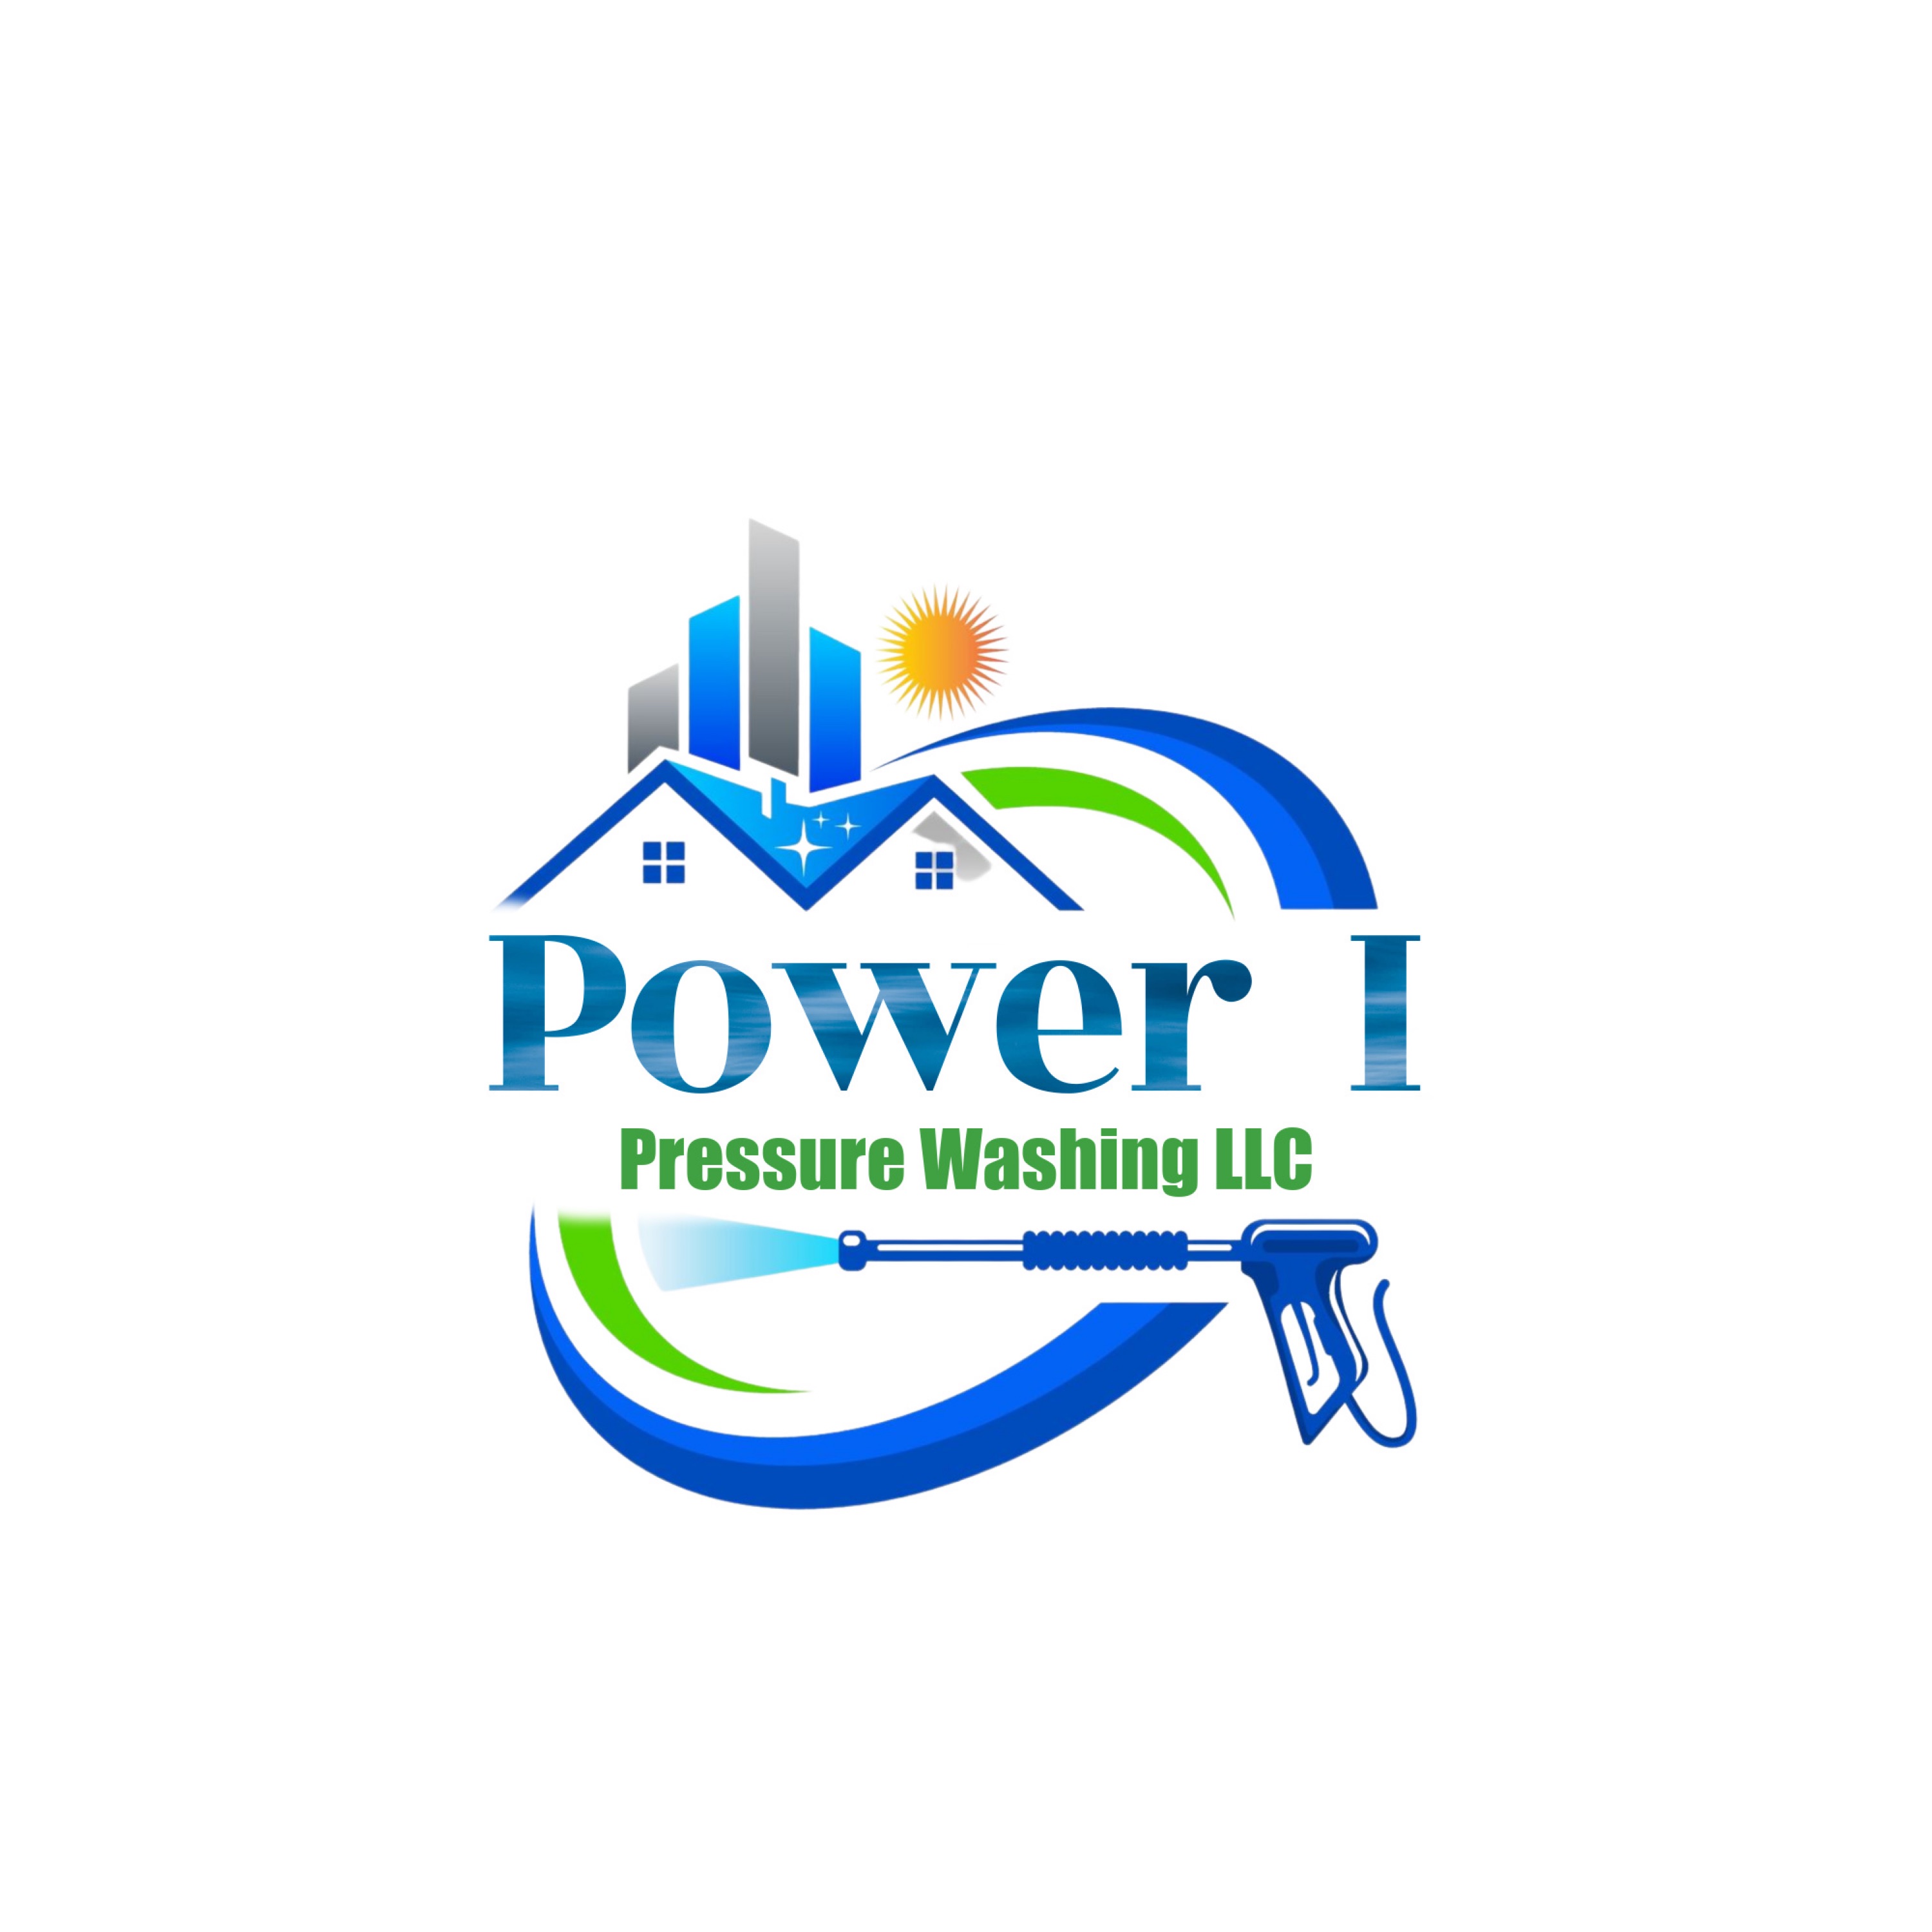 Power I Pressure Washing LLC Logo